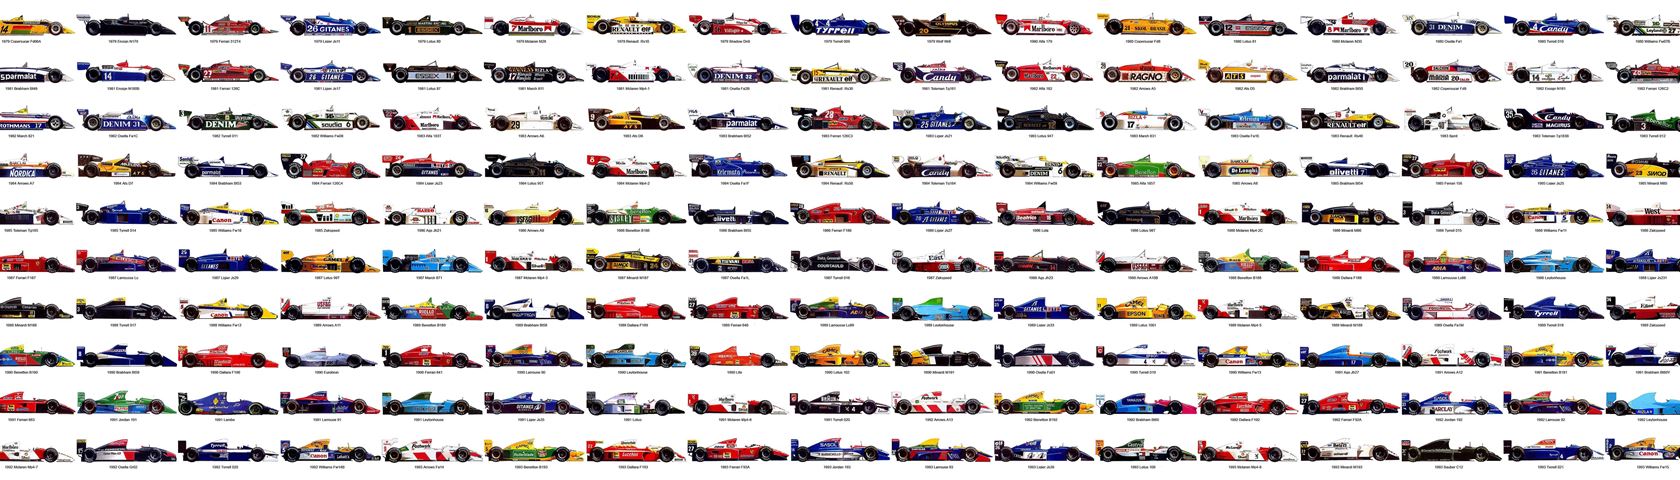 Formula 1 Cars: 1979 to 1994